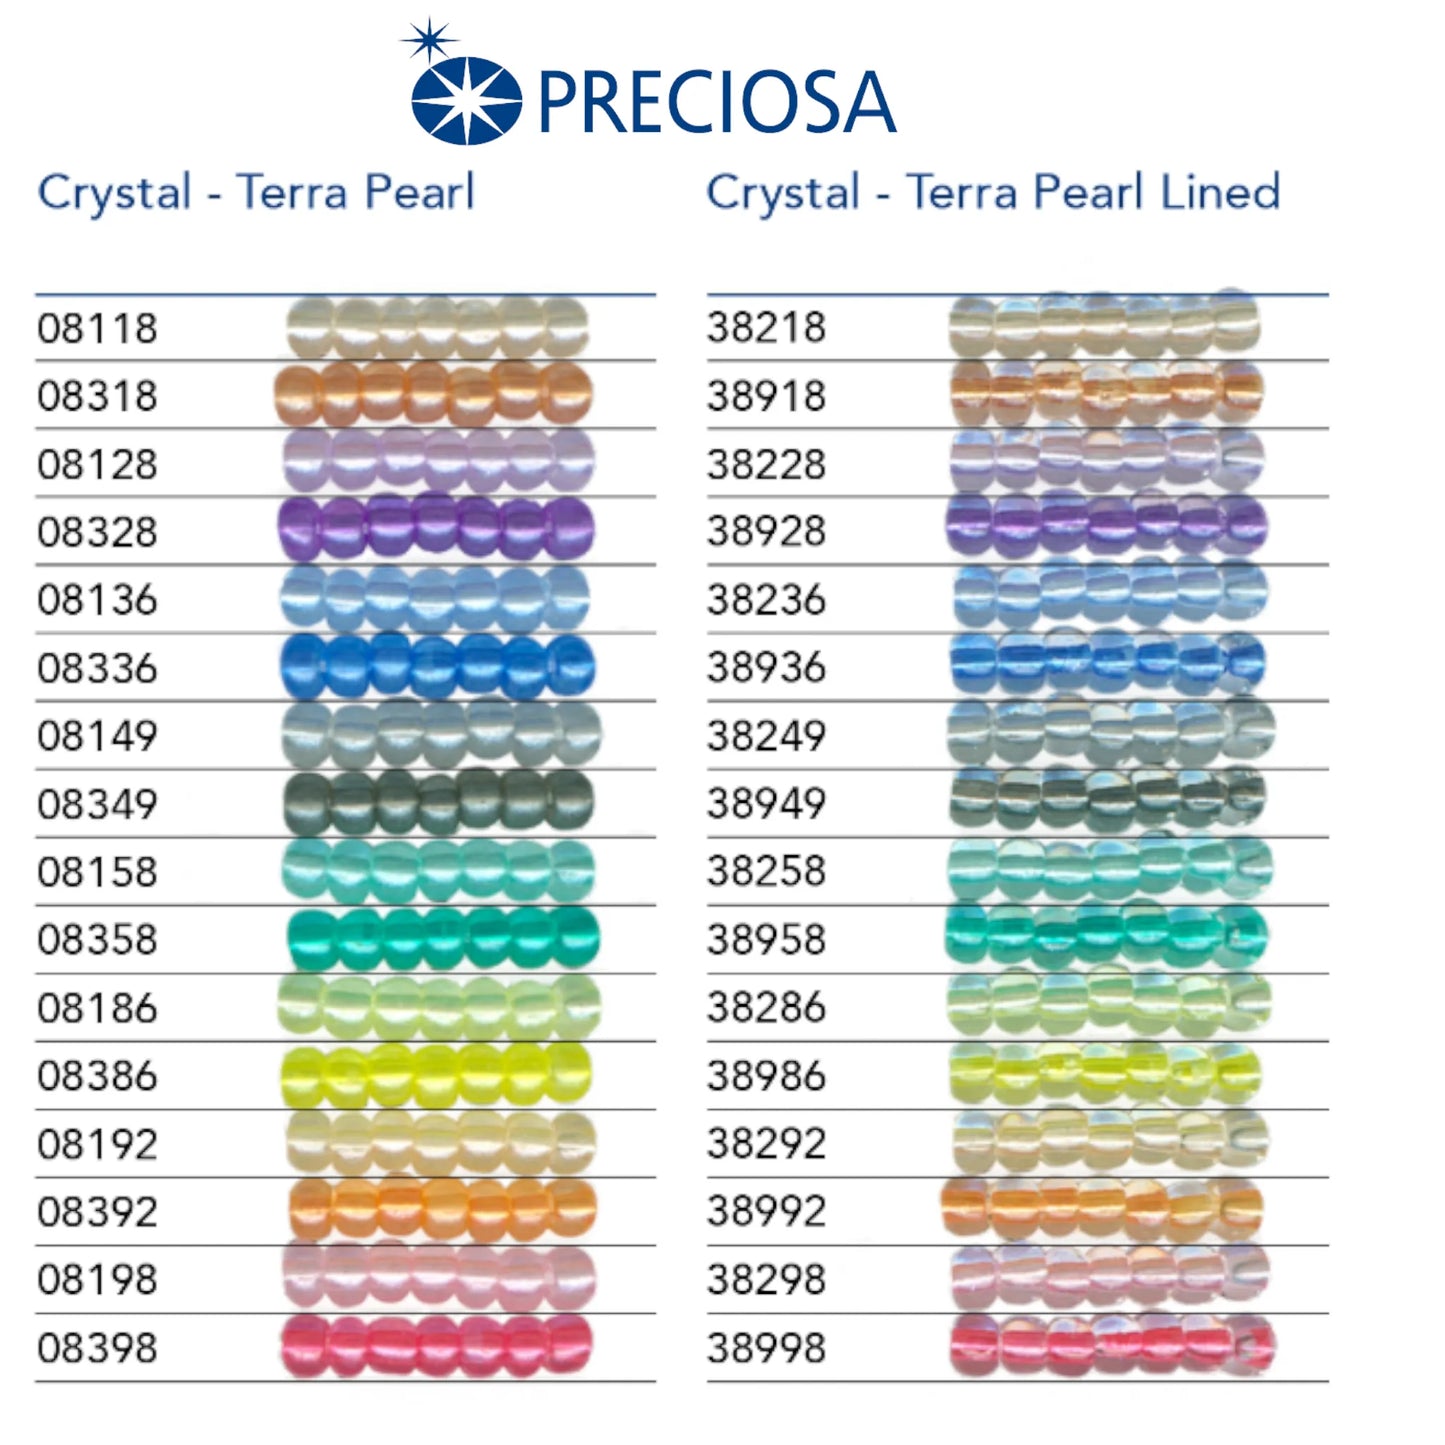 08336 Tschechische Rocailles PRECIOSA Rocailles 10/0 hellblau. Kristall - Terra Pearl.